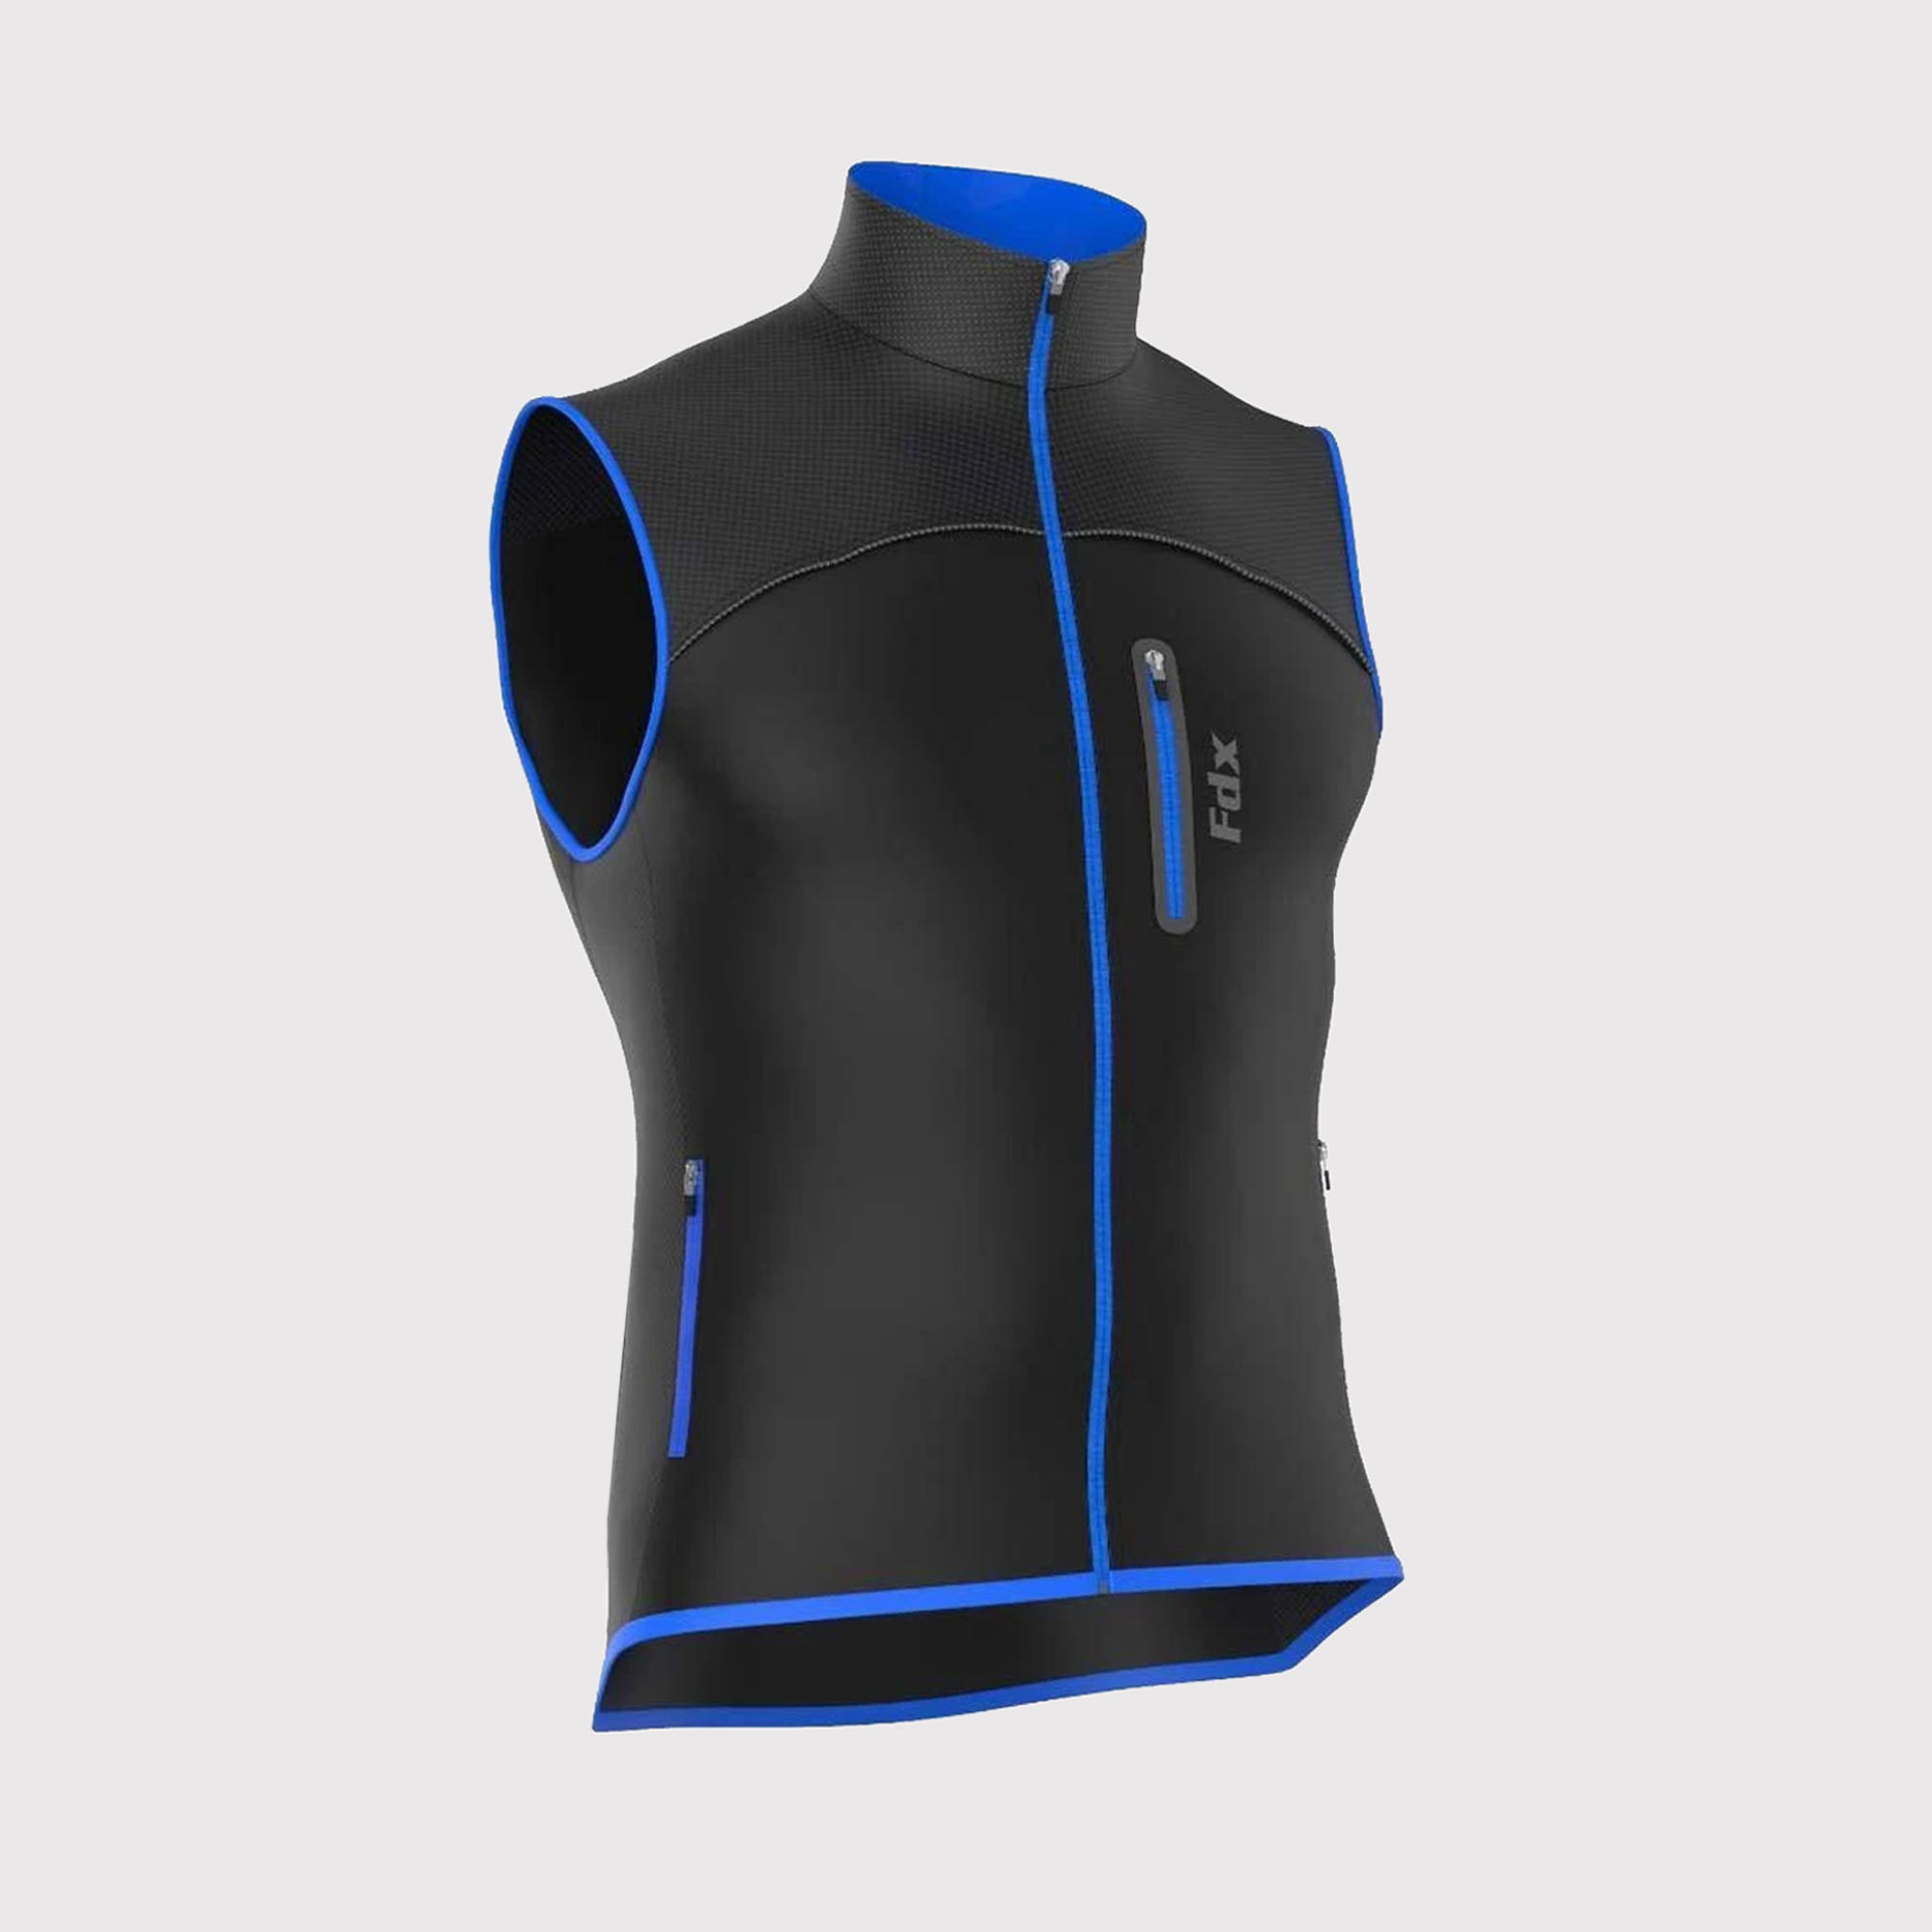 Fdx Men's Black & Blue Cycling Gilet Sleeveless Vest for Winter Clothing Hi-Viz Refectors, Lightweight, Windproof, Waterproof & Pockets - Stunt